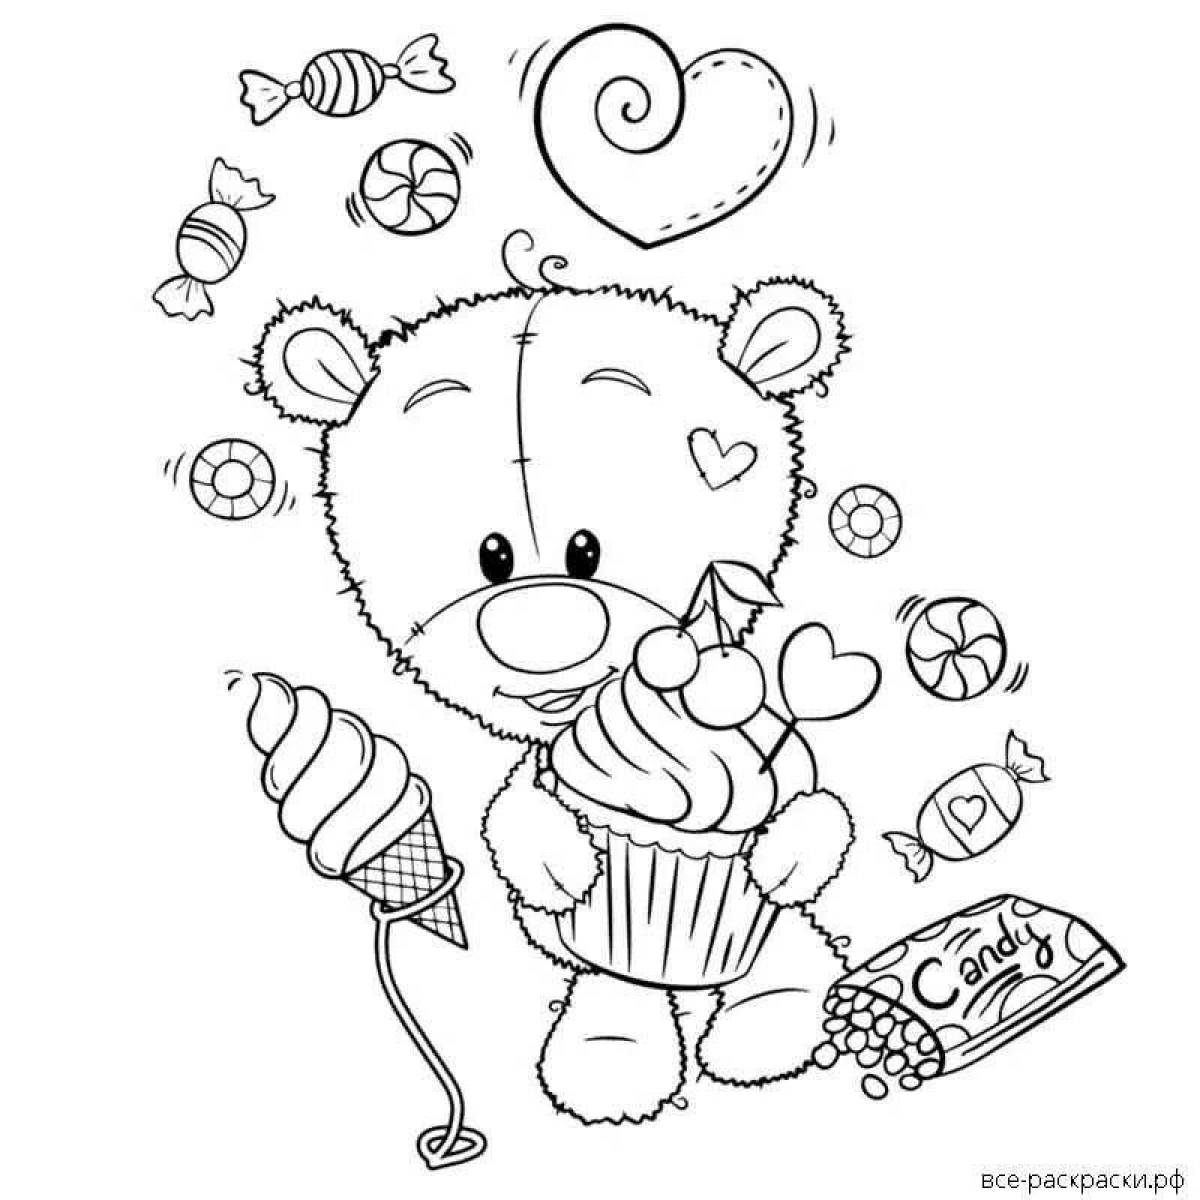 Coloring cute teddy